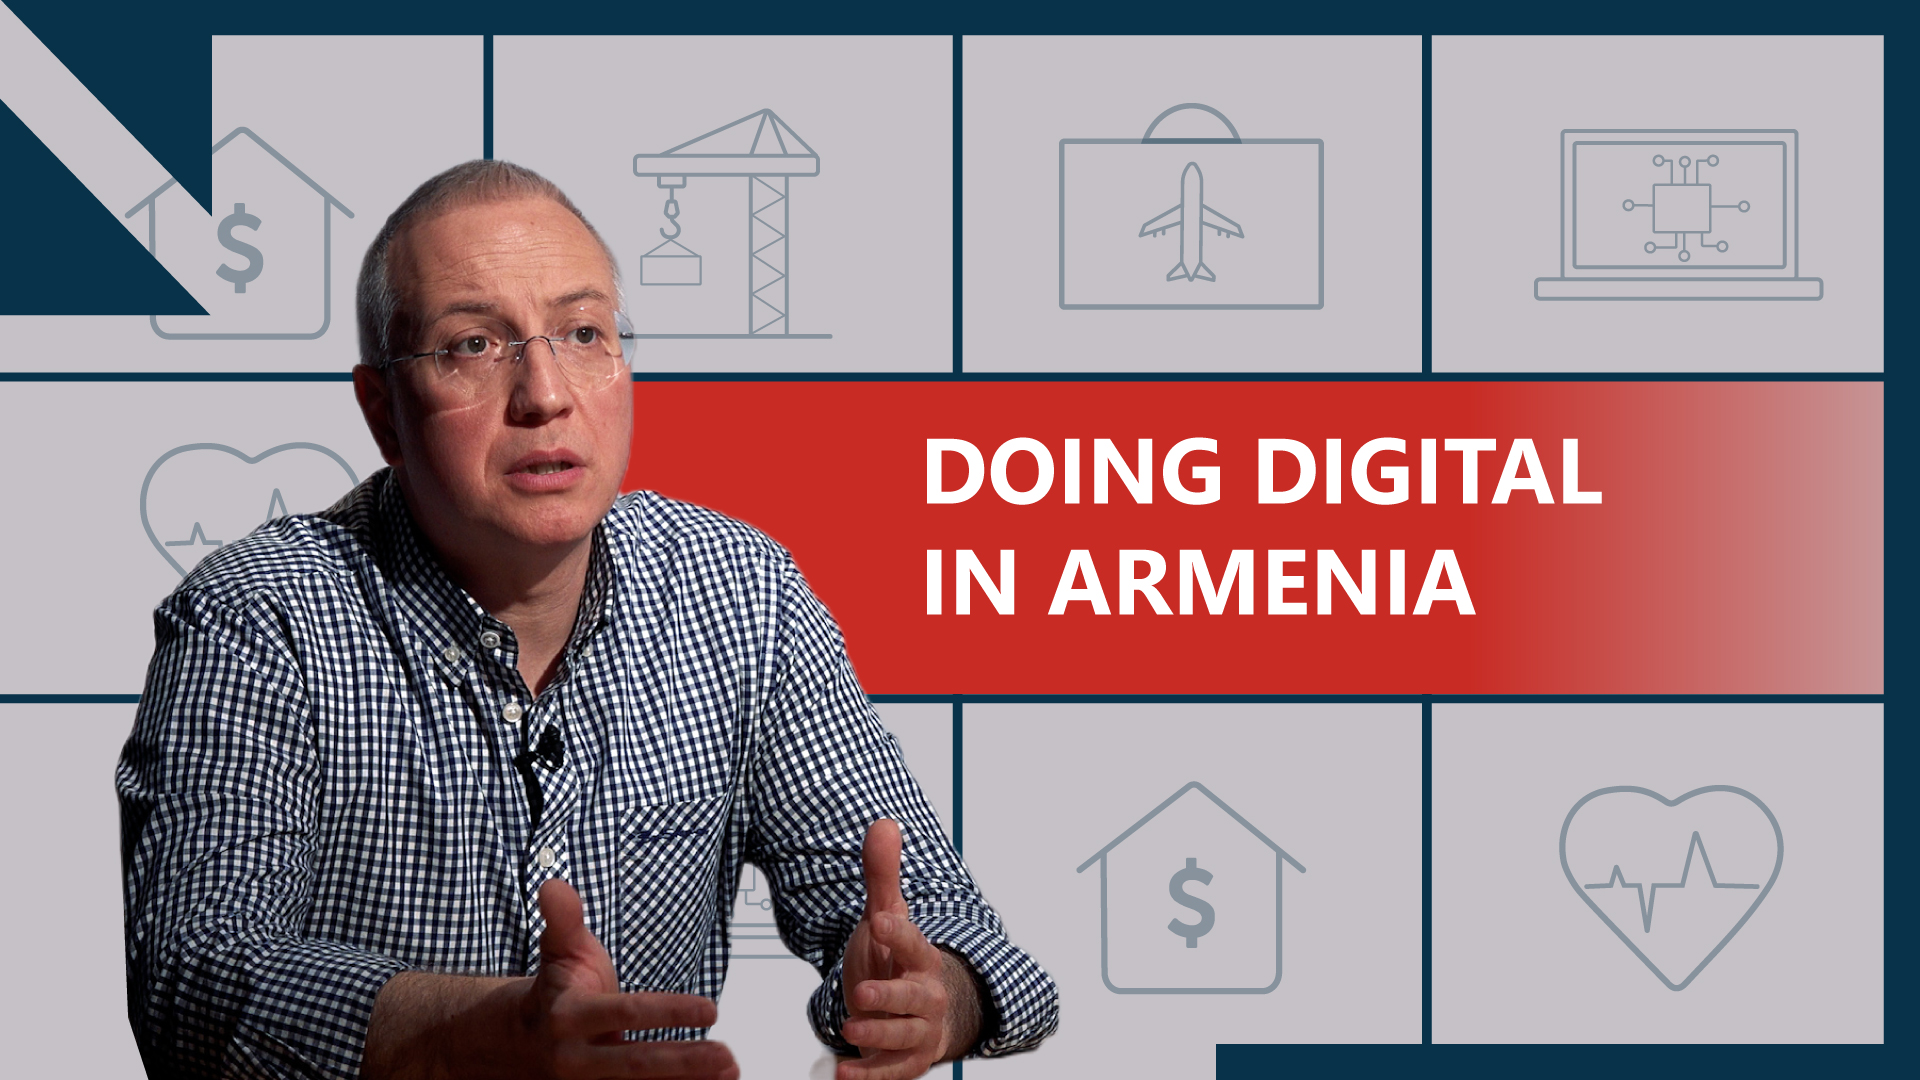 DIGITAL TRANSFORMATION OF ARMENIA